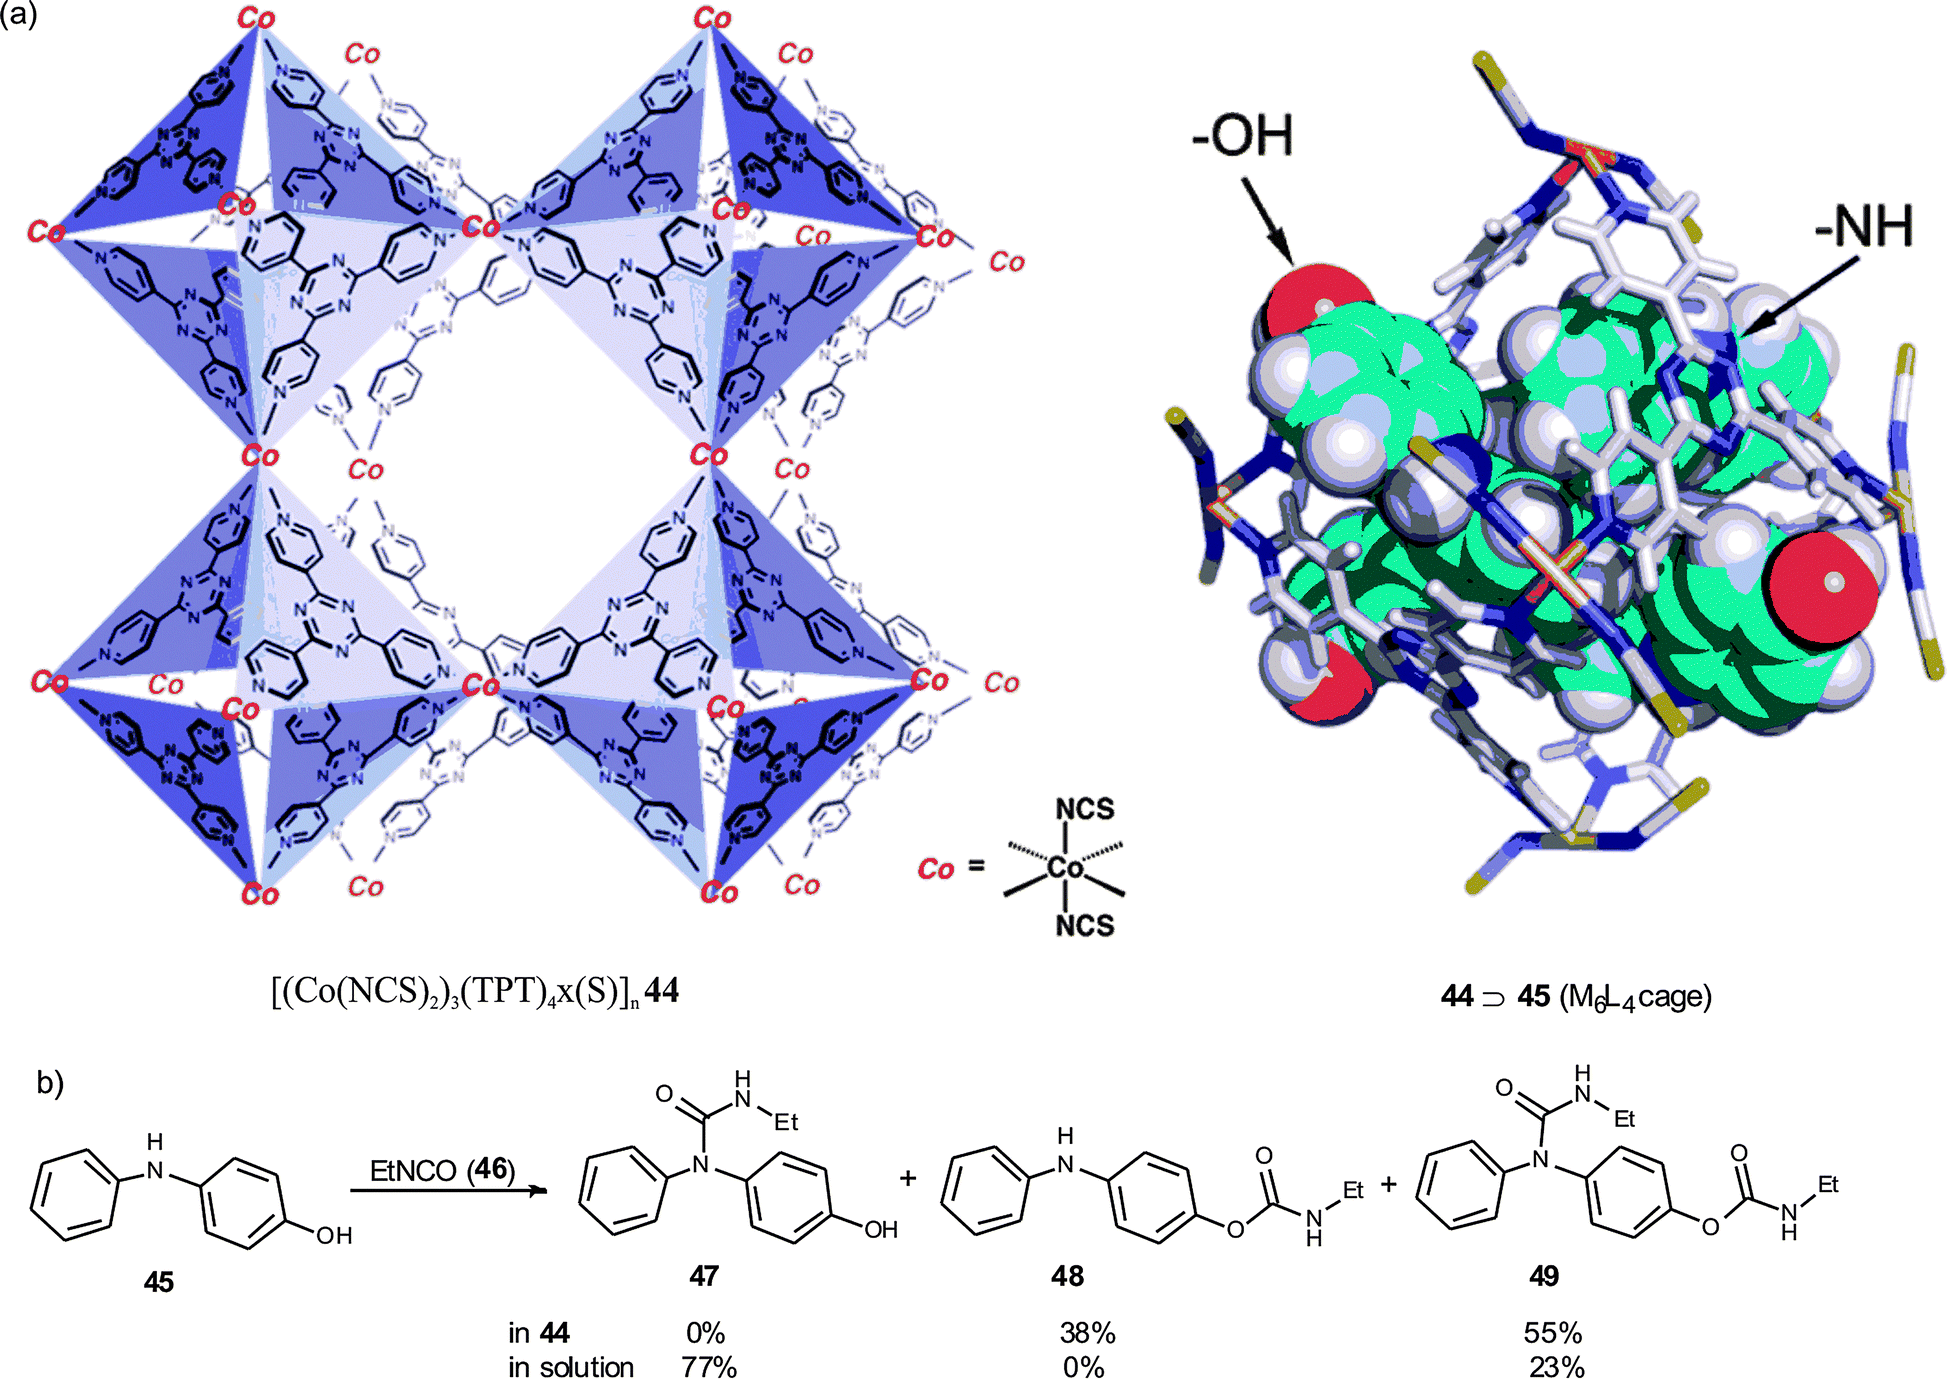 Supramolecular catalysis. Part 2: artificial enzyme mimics - Chemical  Society Reviews (RSC Publishing) DOI:10.1039/C3CS60037H